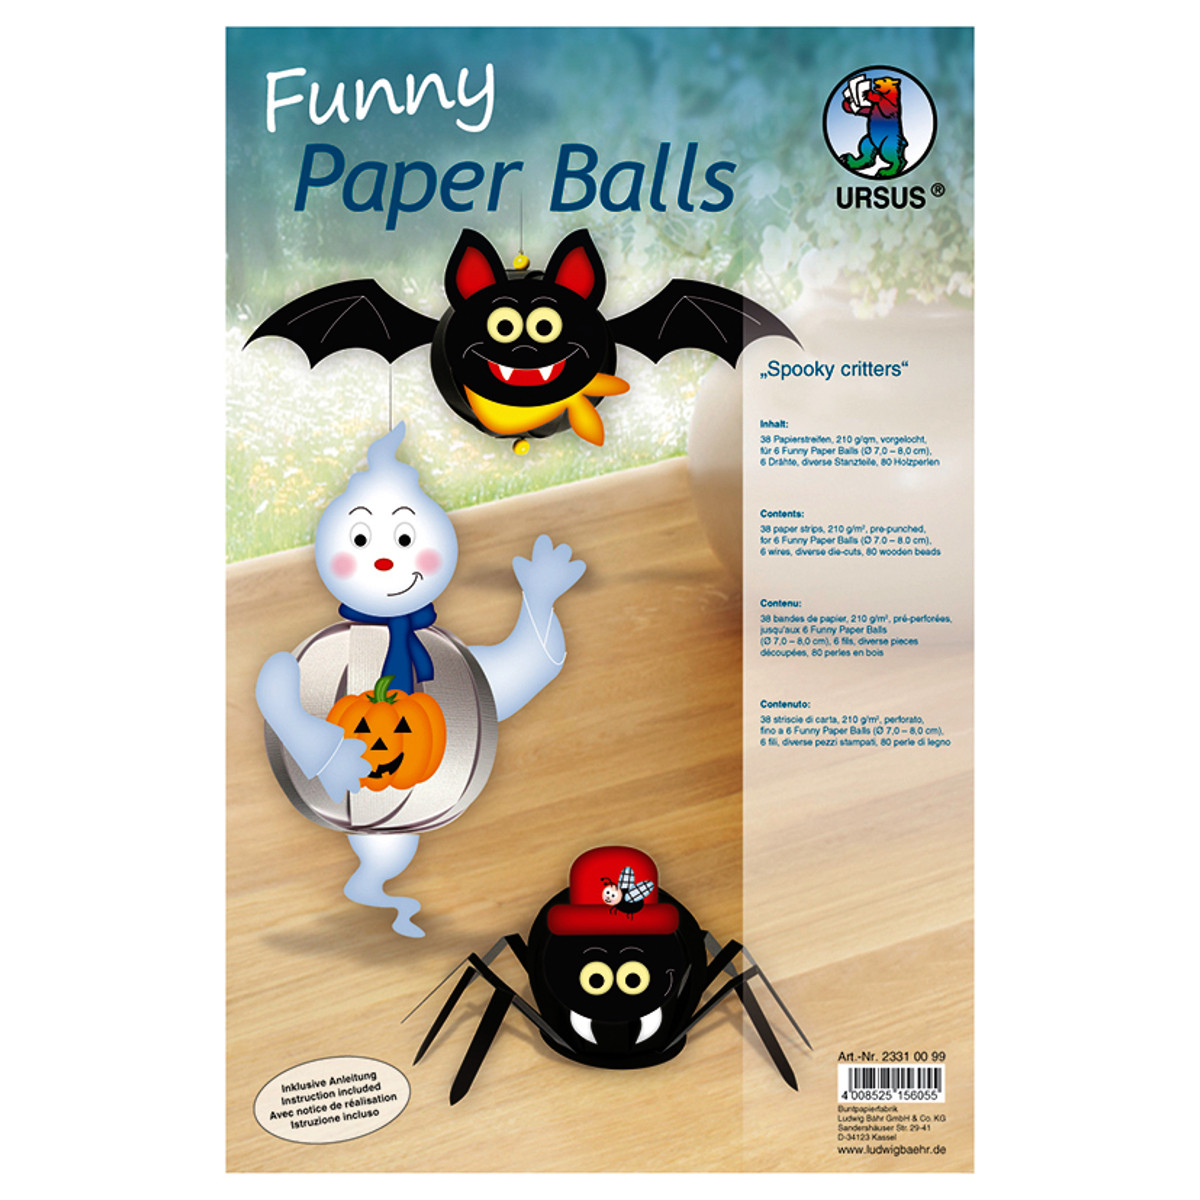 Funny Paper Balls "Spooky critters"